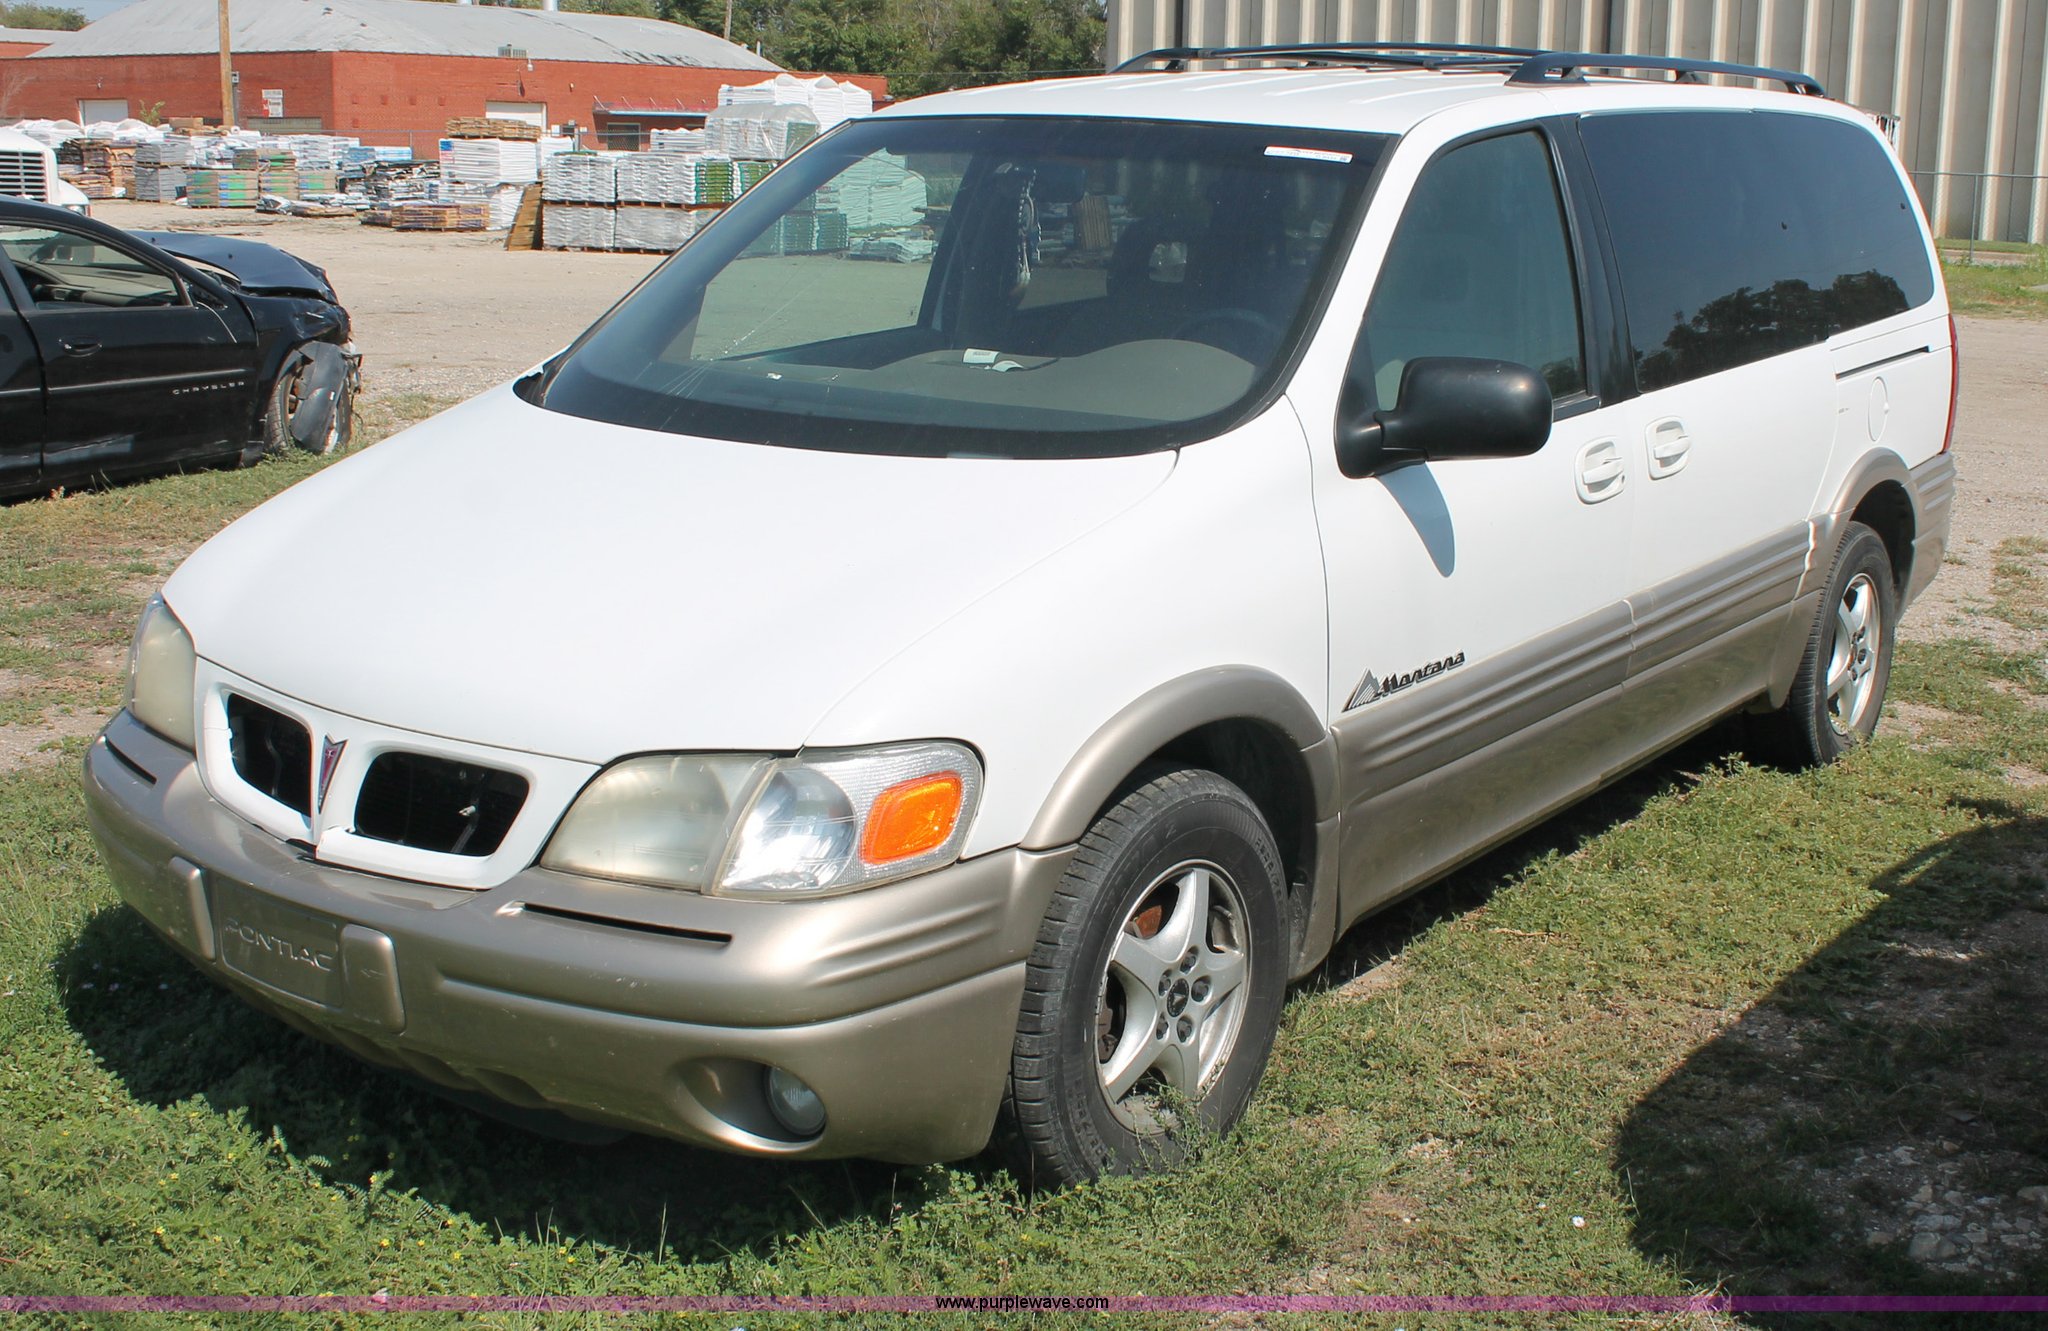 1999 Pontiac Montana mini van in Wichita, KS | Item O9339 sold | Purple Wave